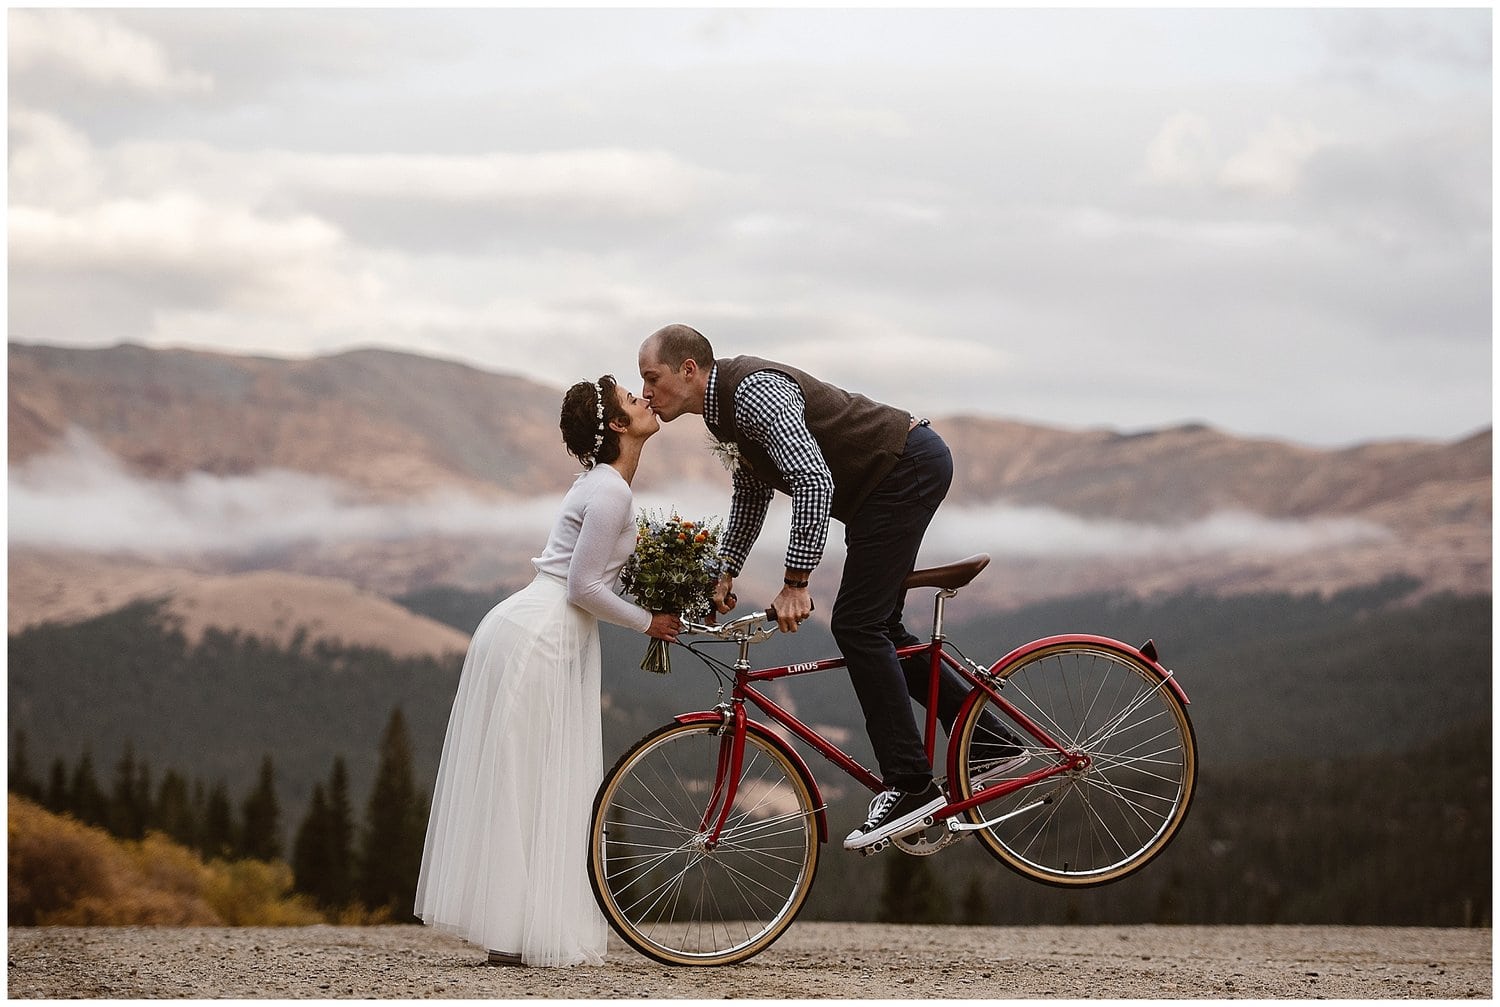 Groom rides bike and kissed bride. 